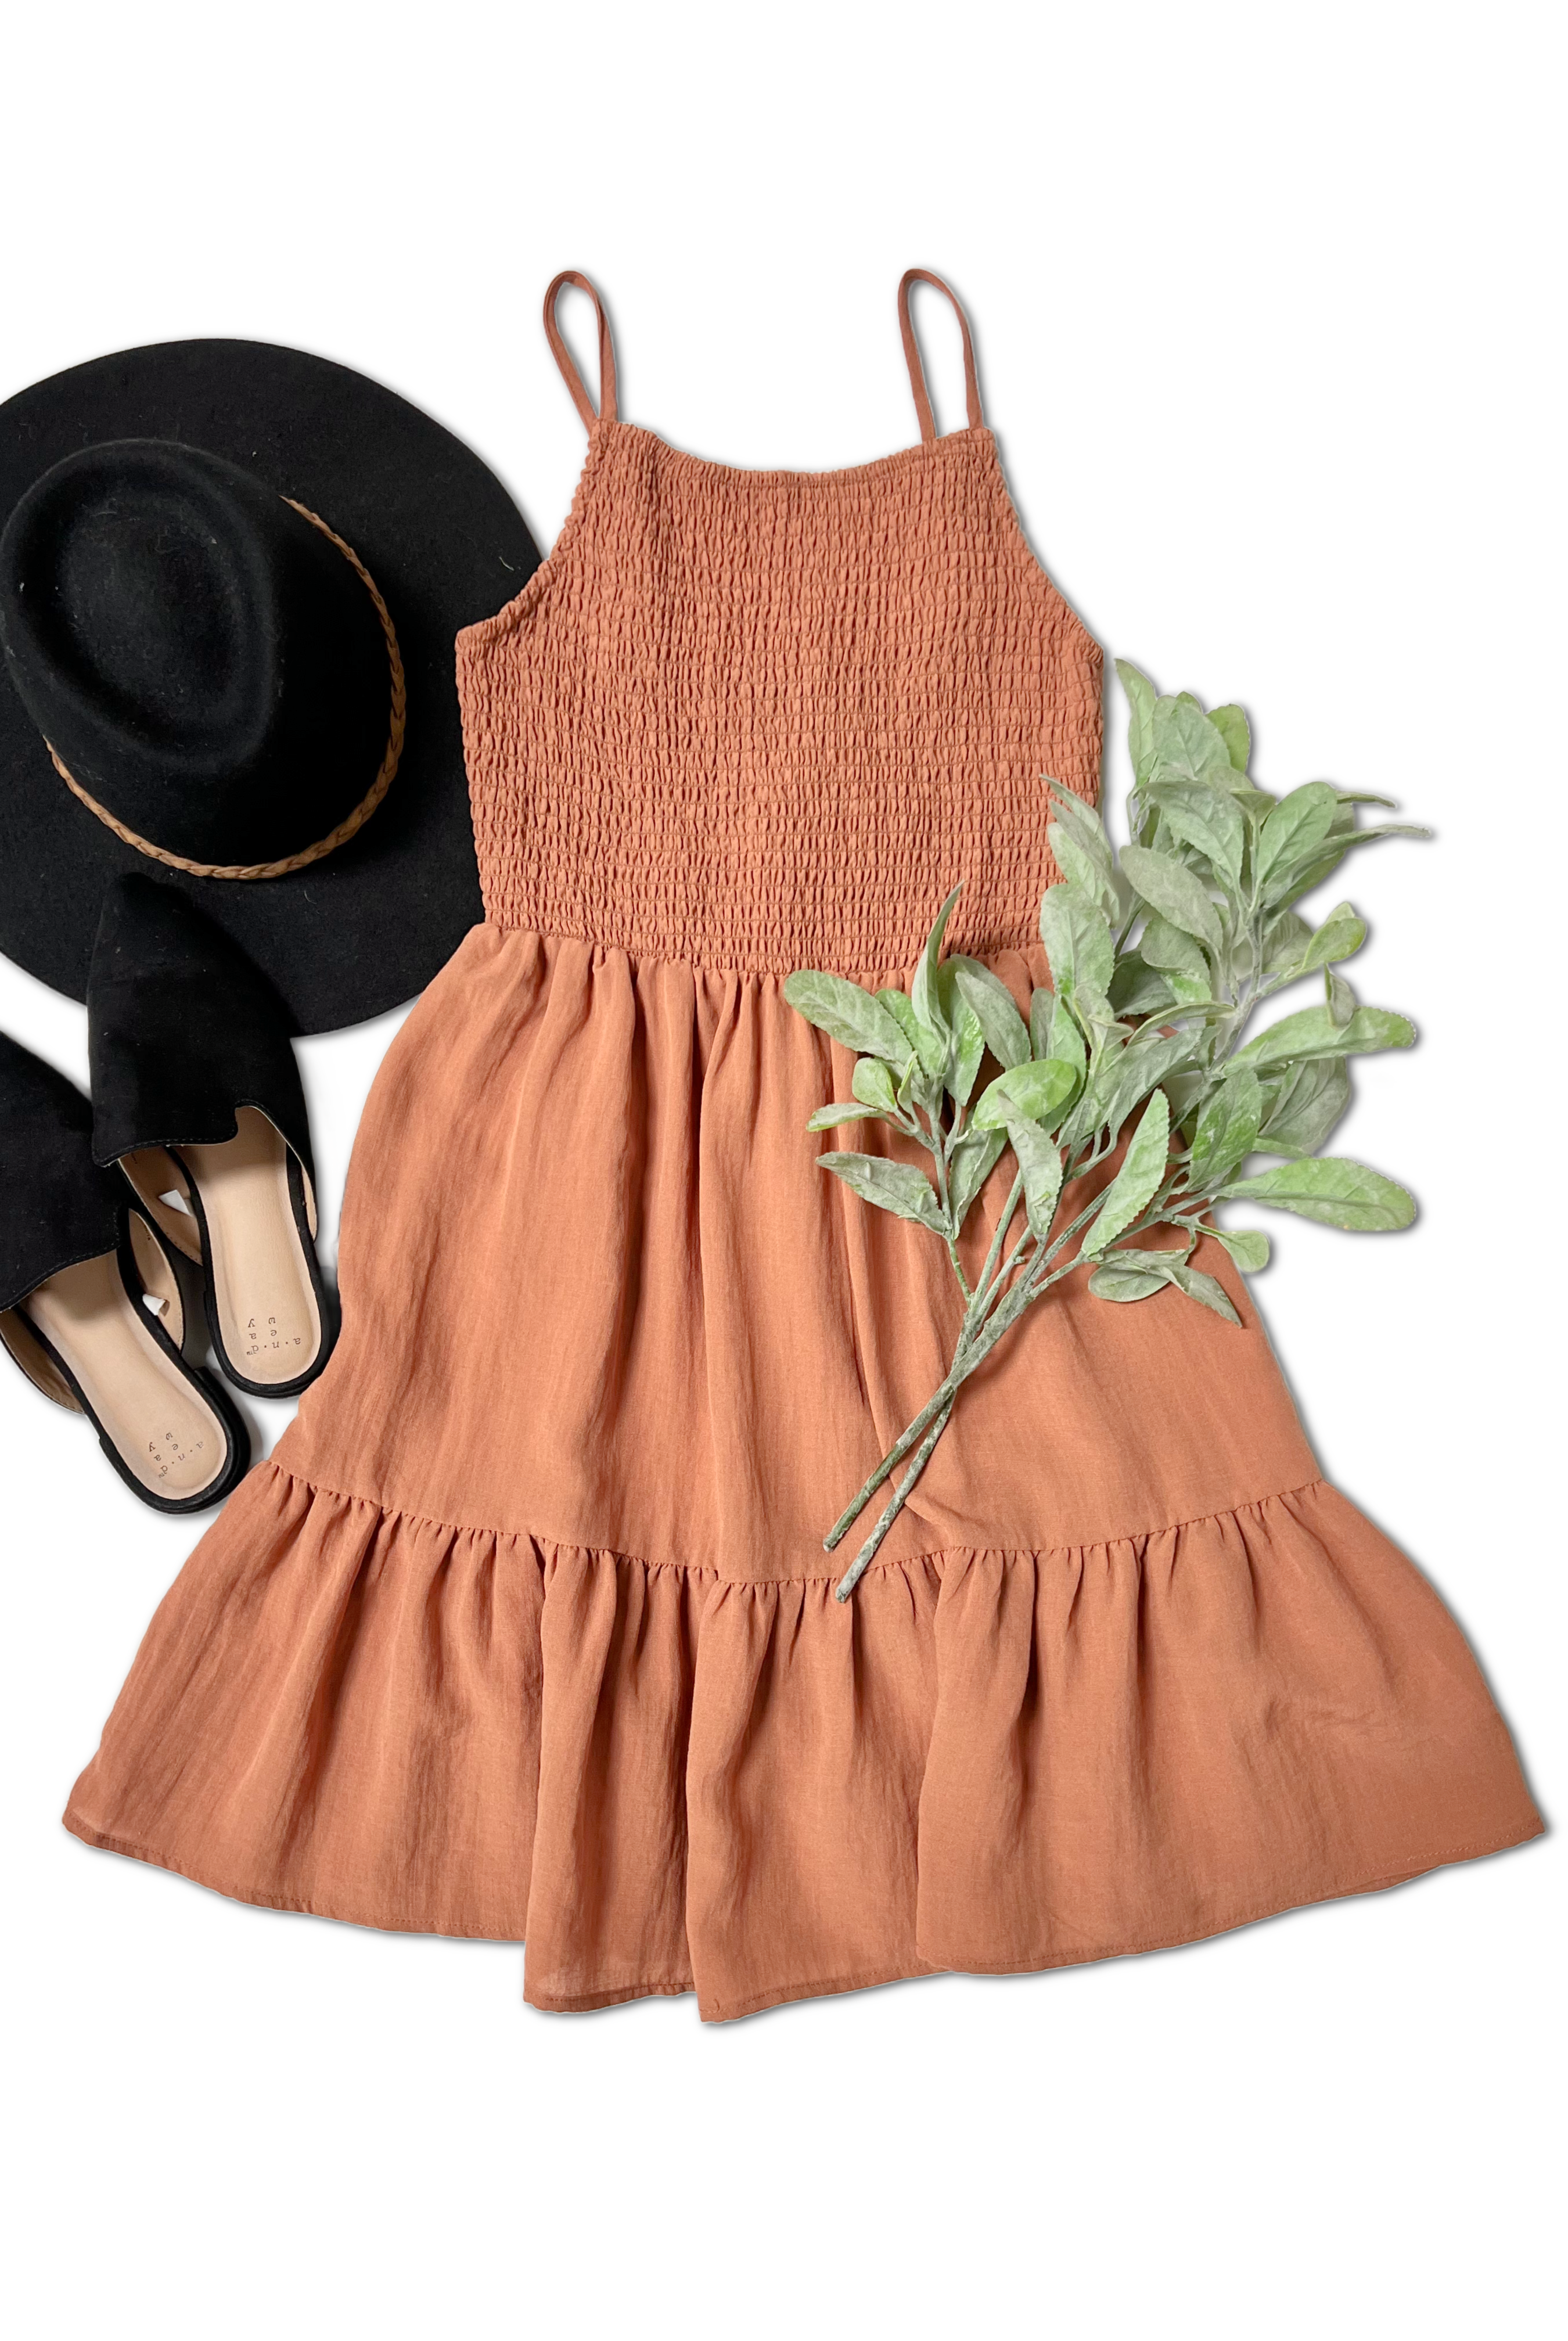 Mojave Summer Dress-OOTD Boutique Simplified-Urban Threadz Boutique, Women's Fashion Boutique in Saugatuck, MI